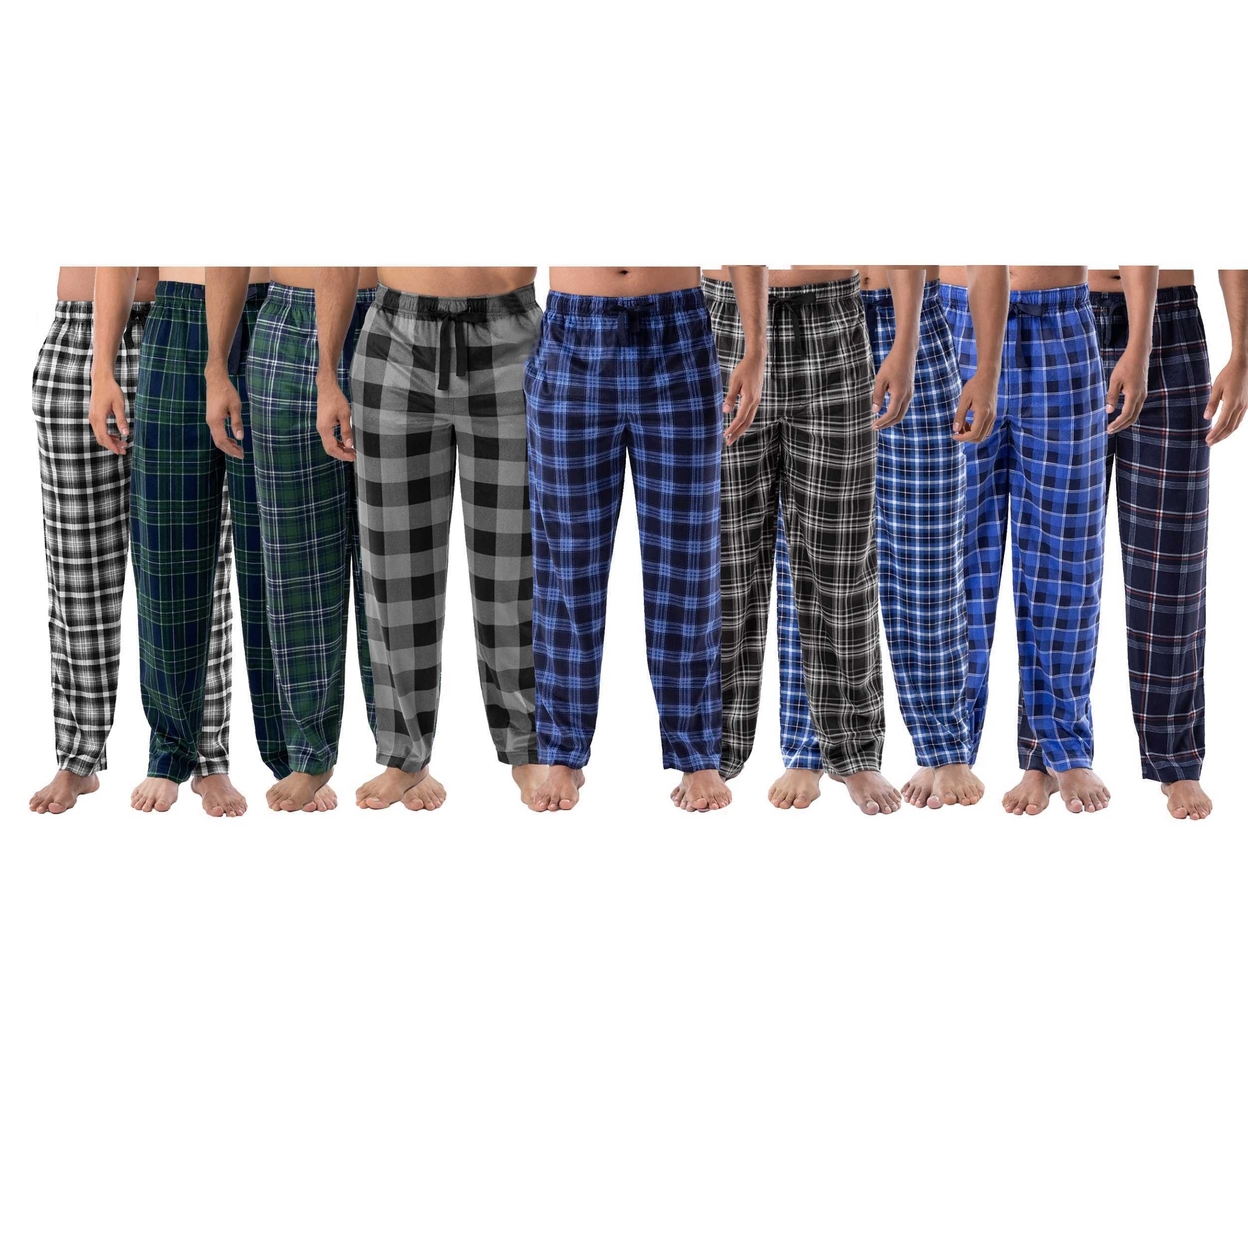 5-Pack: Men's Ultra-Soft Cozy Lounge Sleep Micro Fleece Plaid Pajama Pants - Small